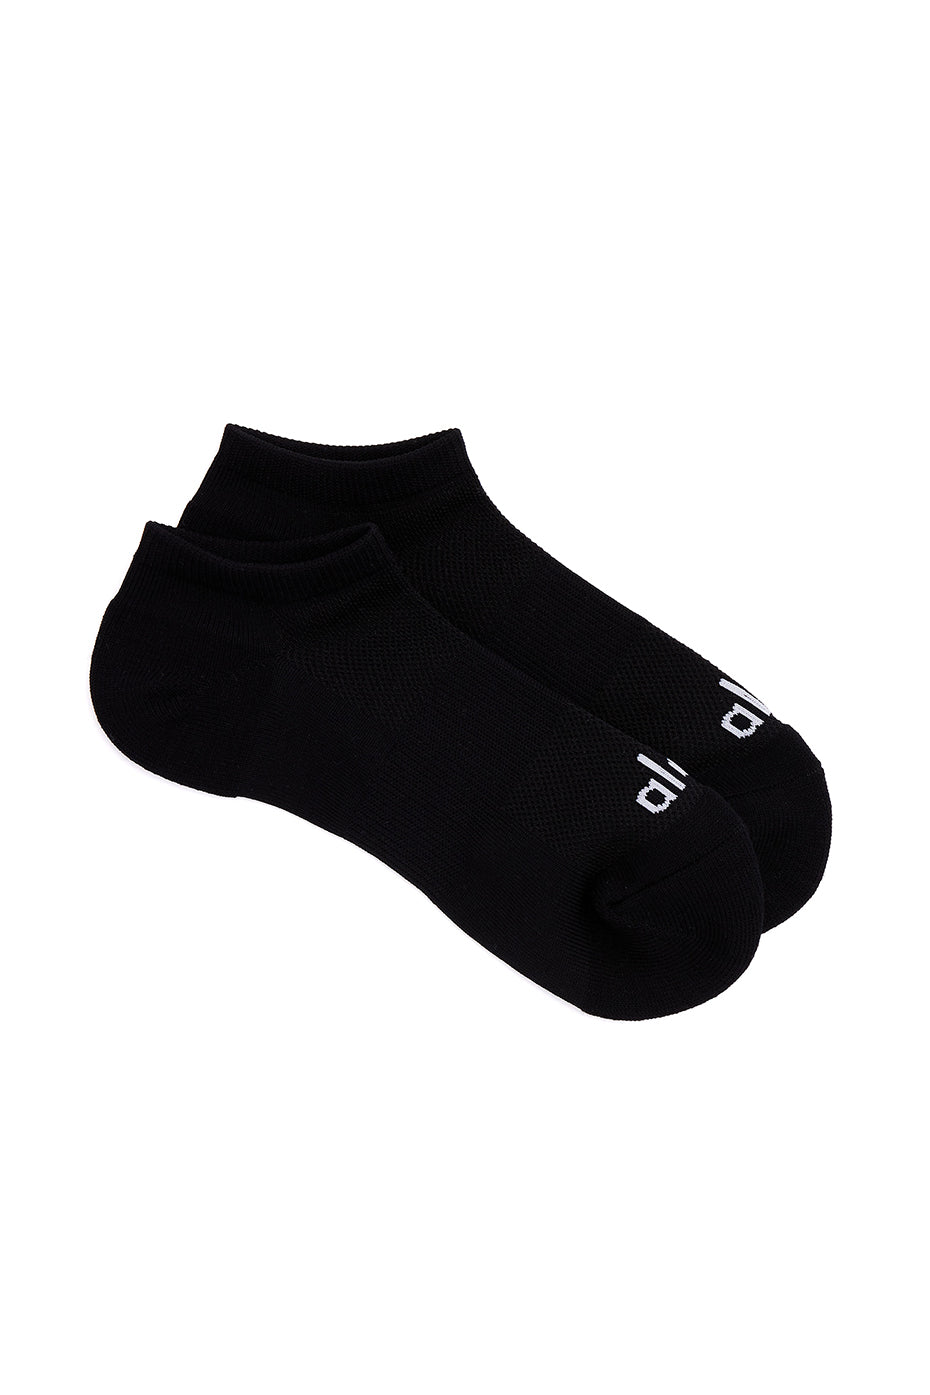 Black Genio grip socks. – Geniosoccer